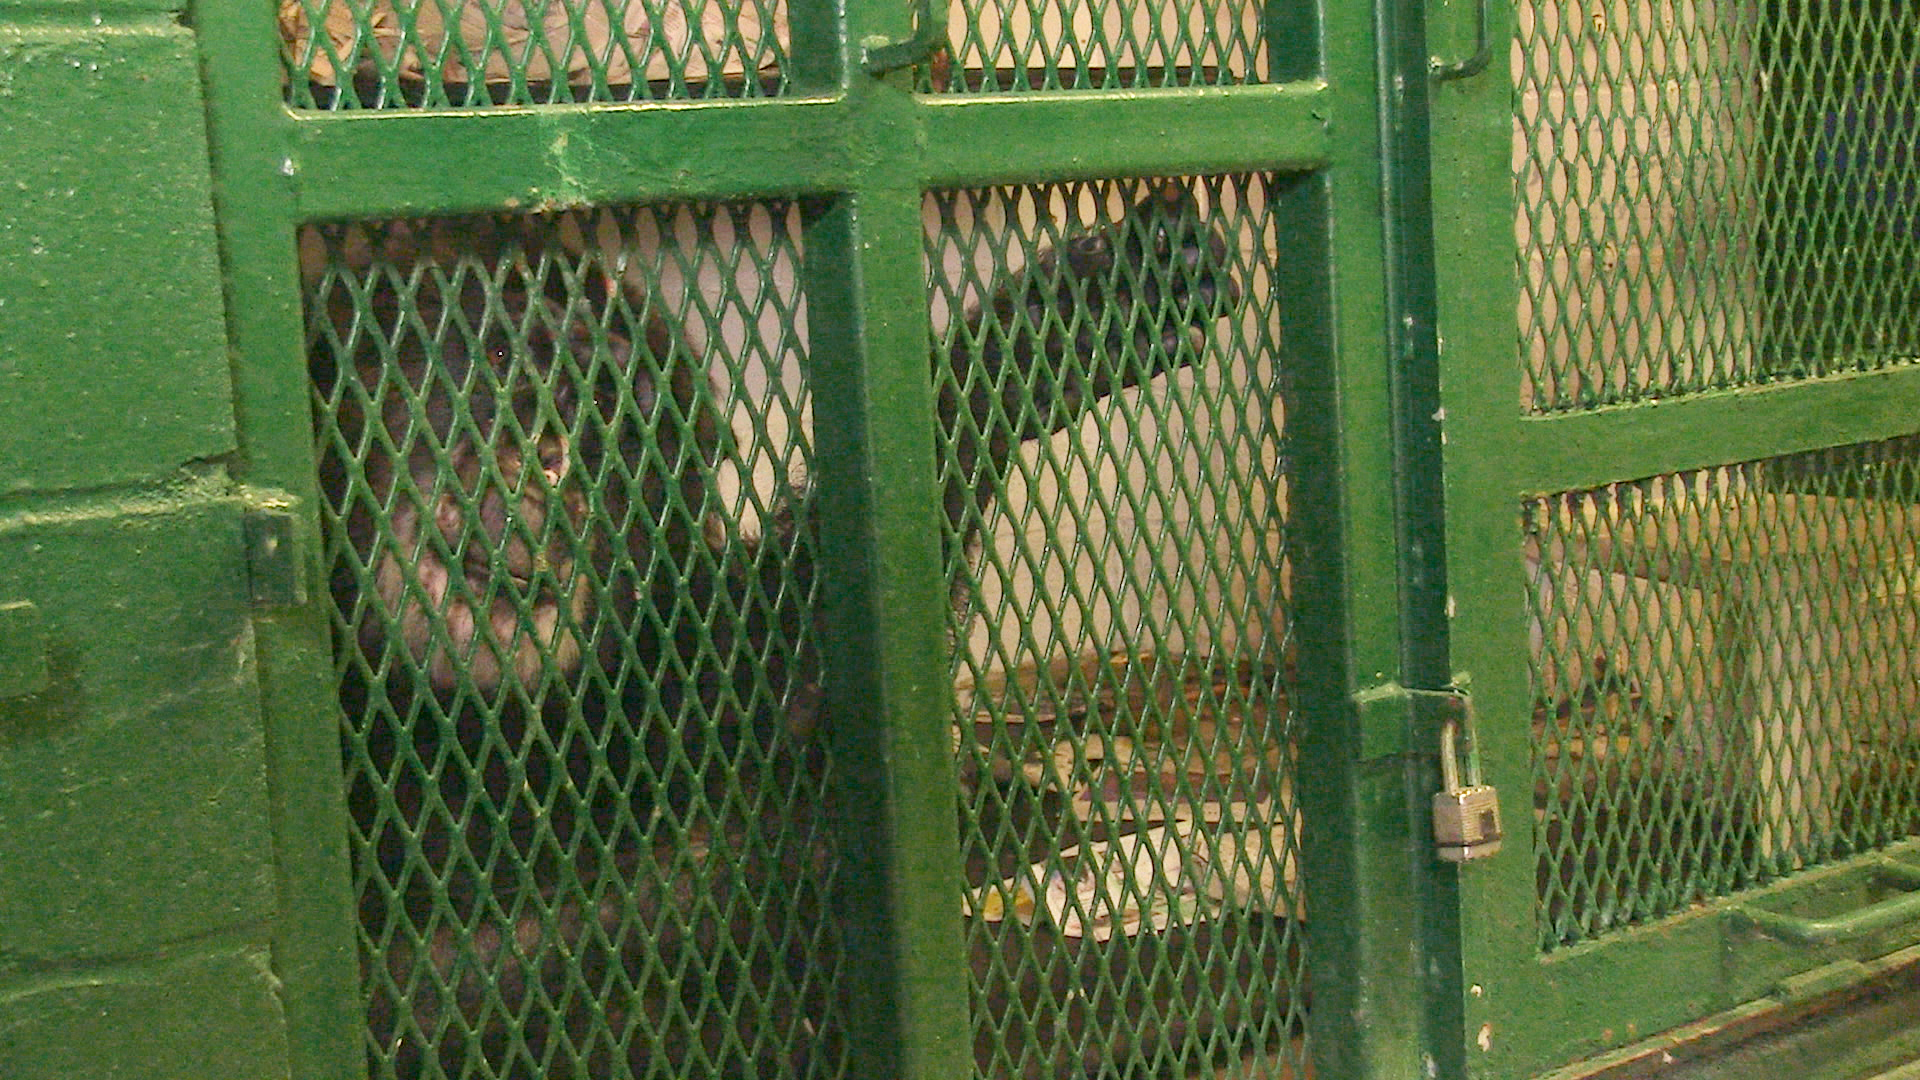 Tommy the chimpanzee (2014 Pennebaker Hegedus Films, Inc.)